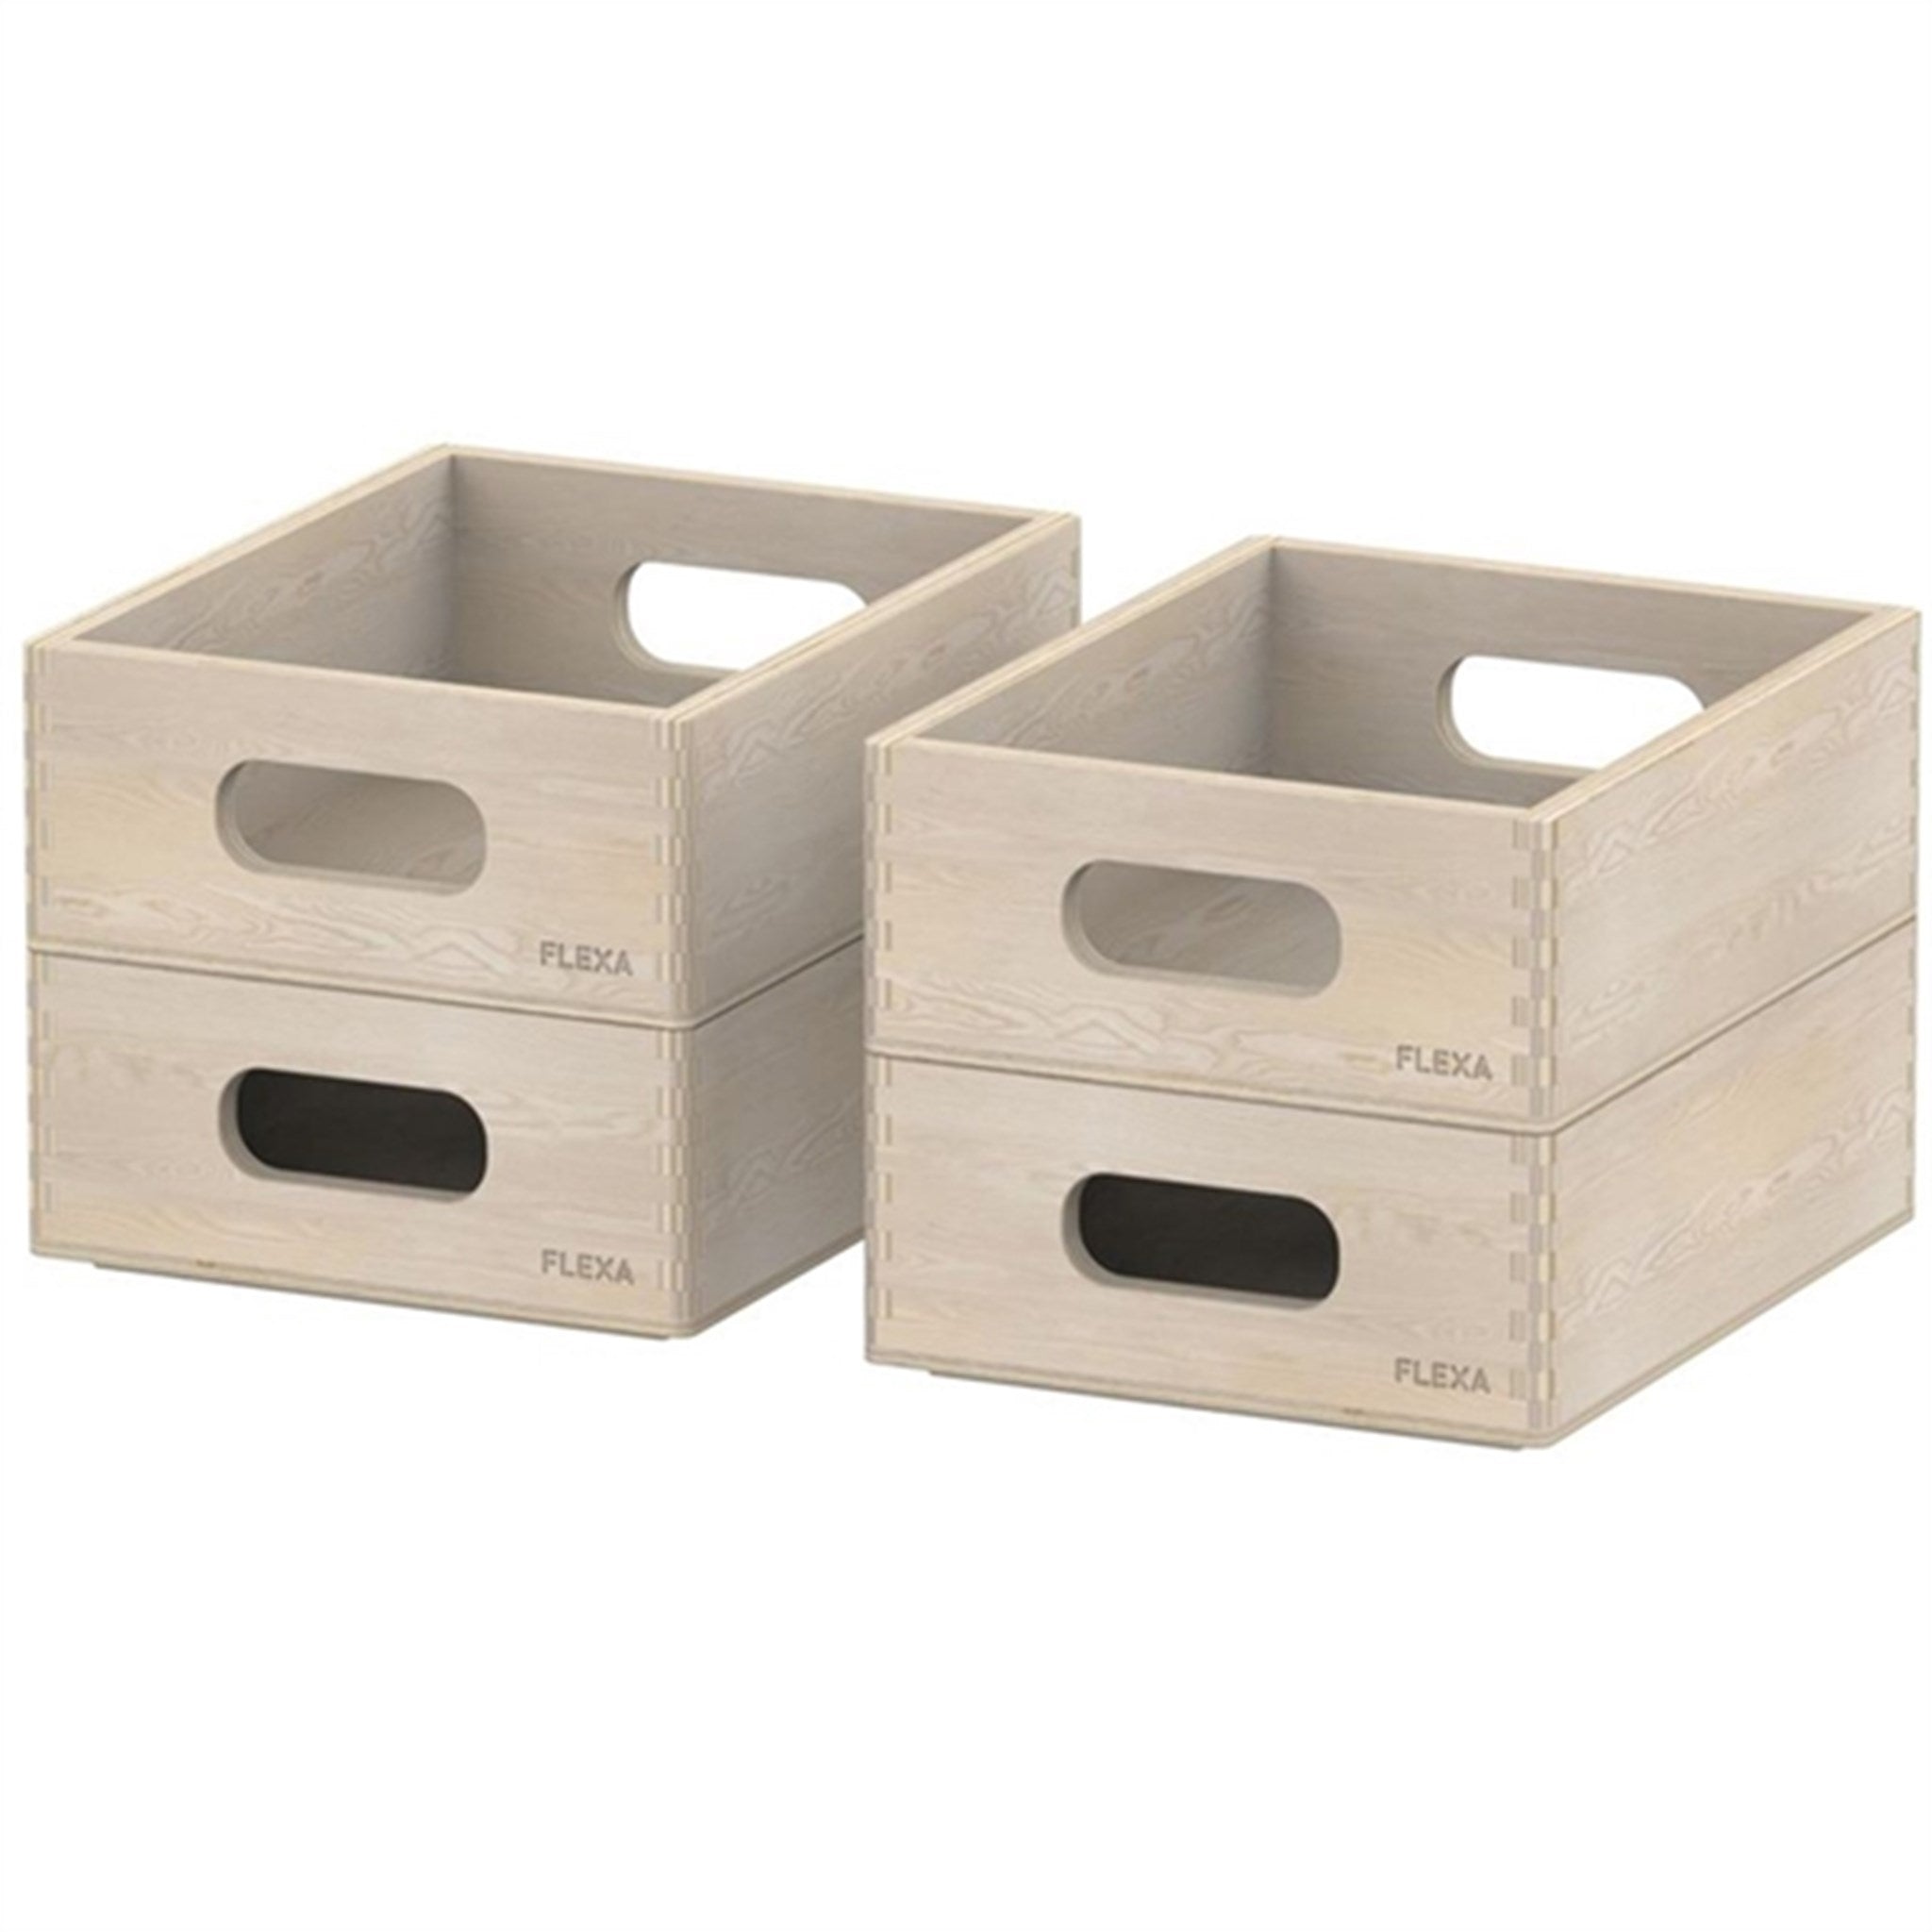 FLEXA PLAY Wooden Storage Box Set - Mini Natural